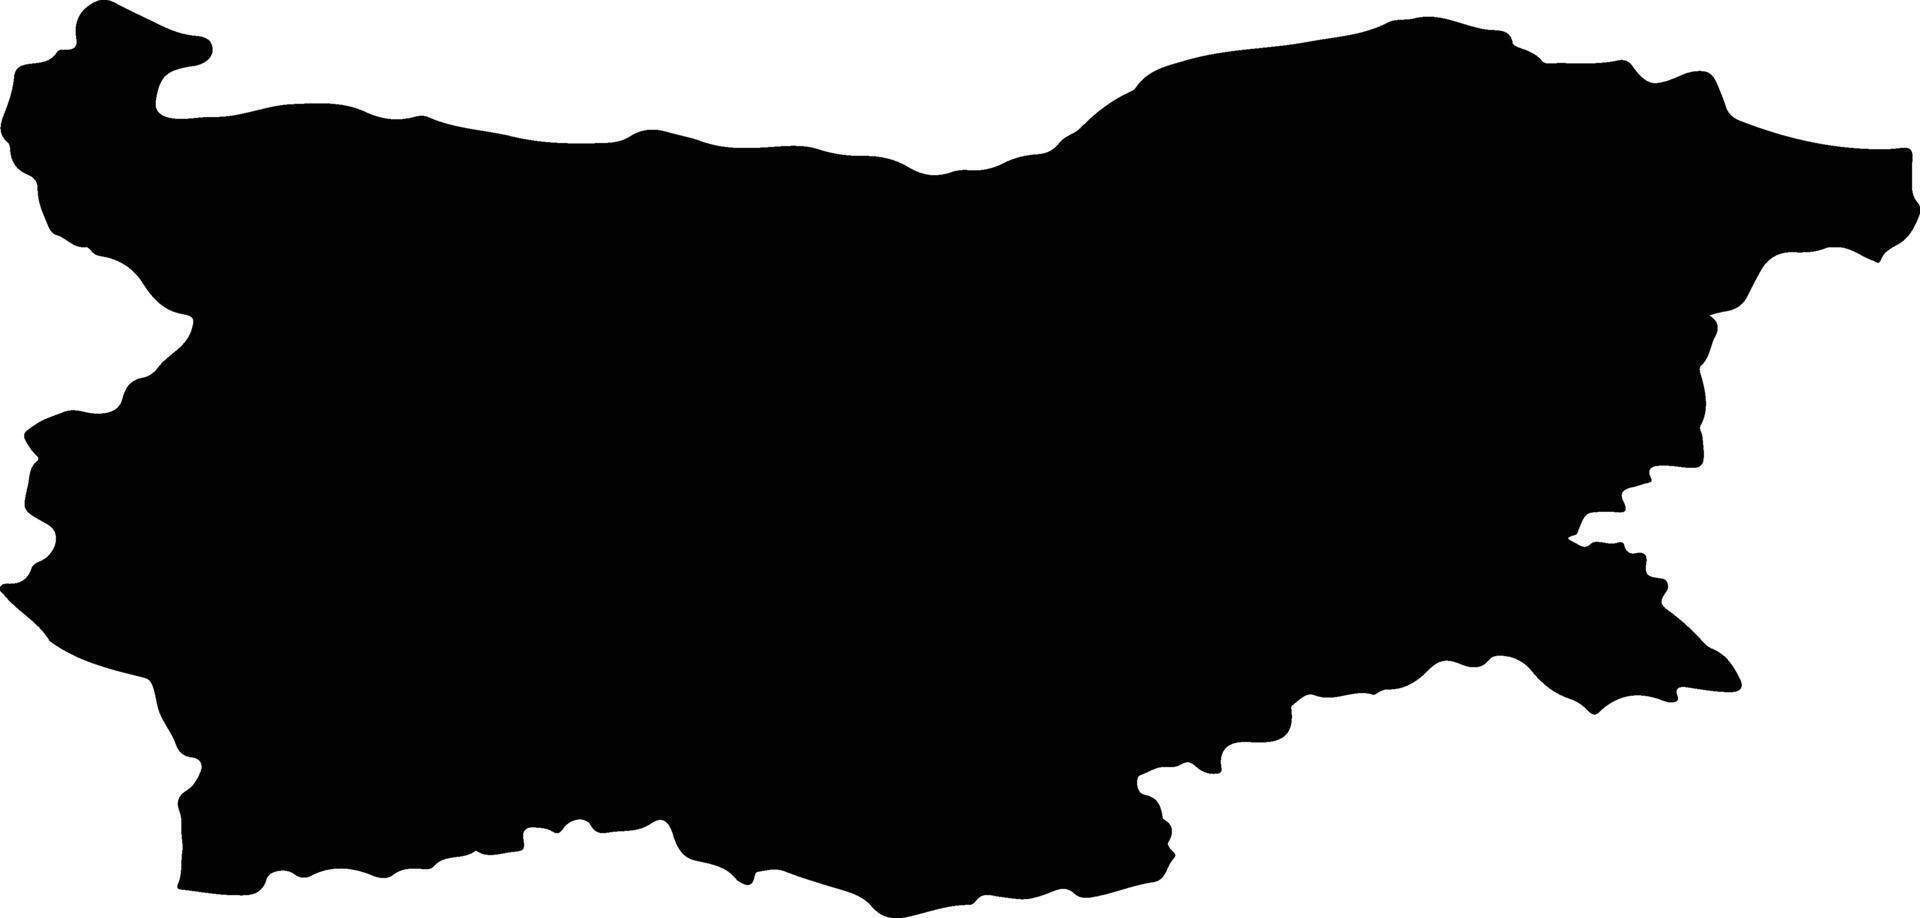 Bulgaria silhouette map vector